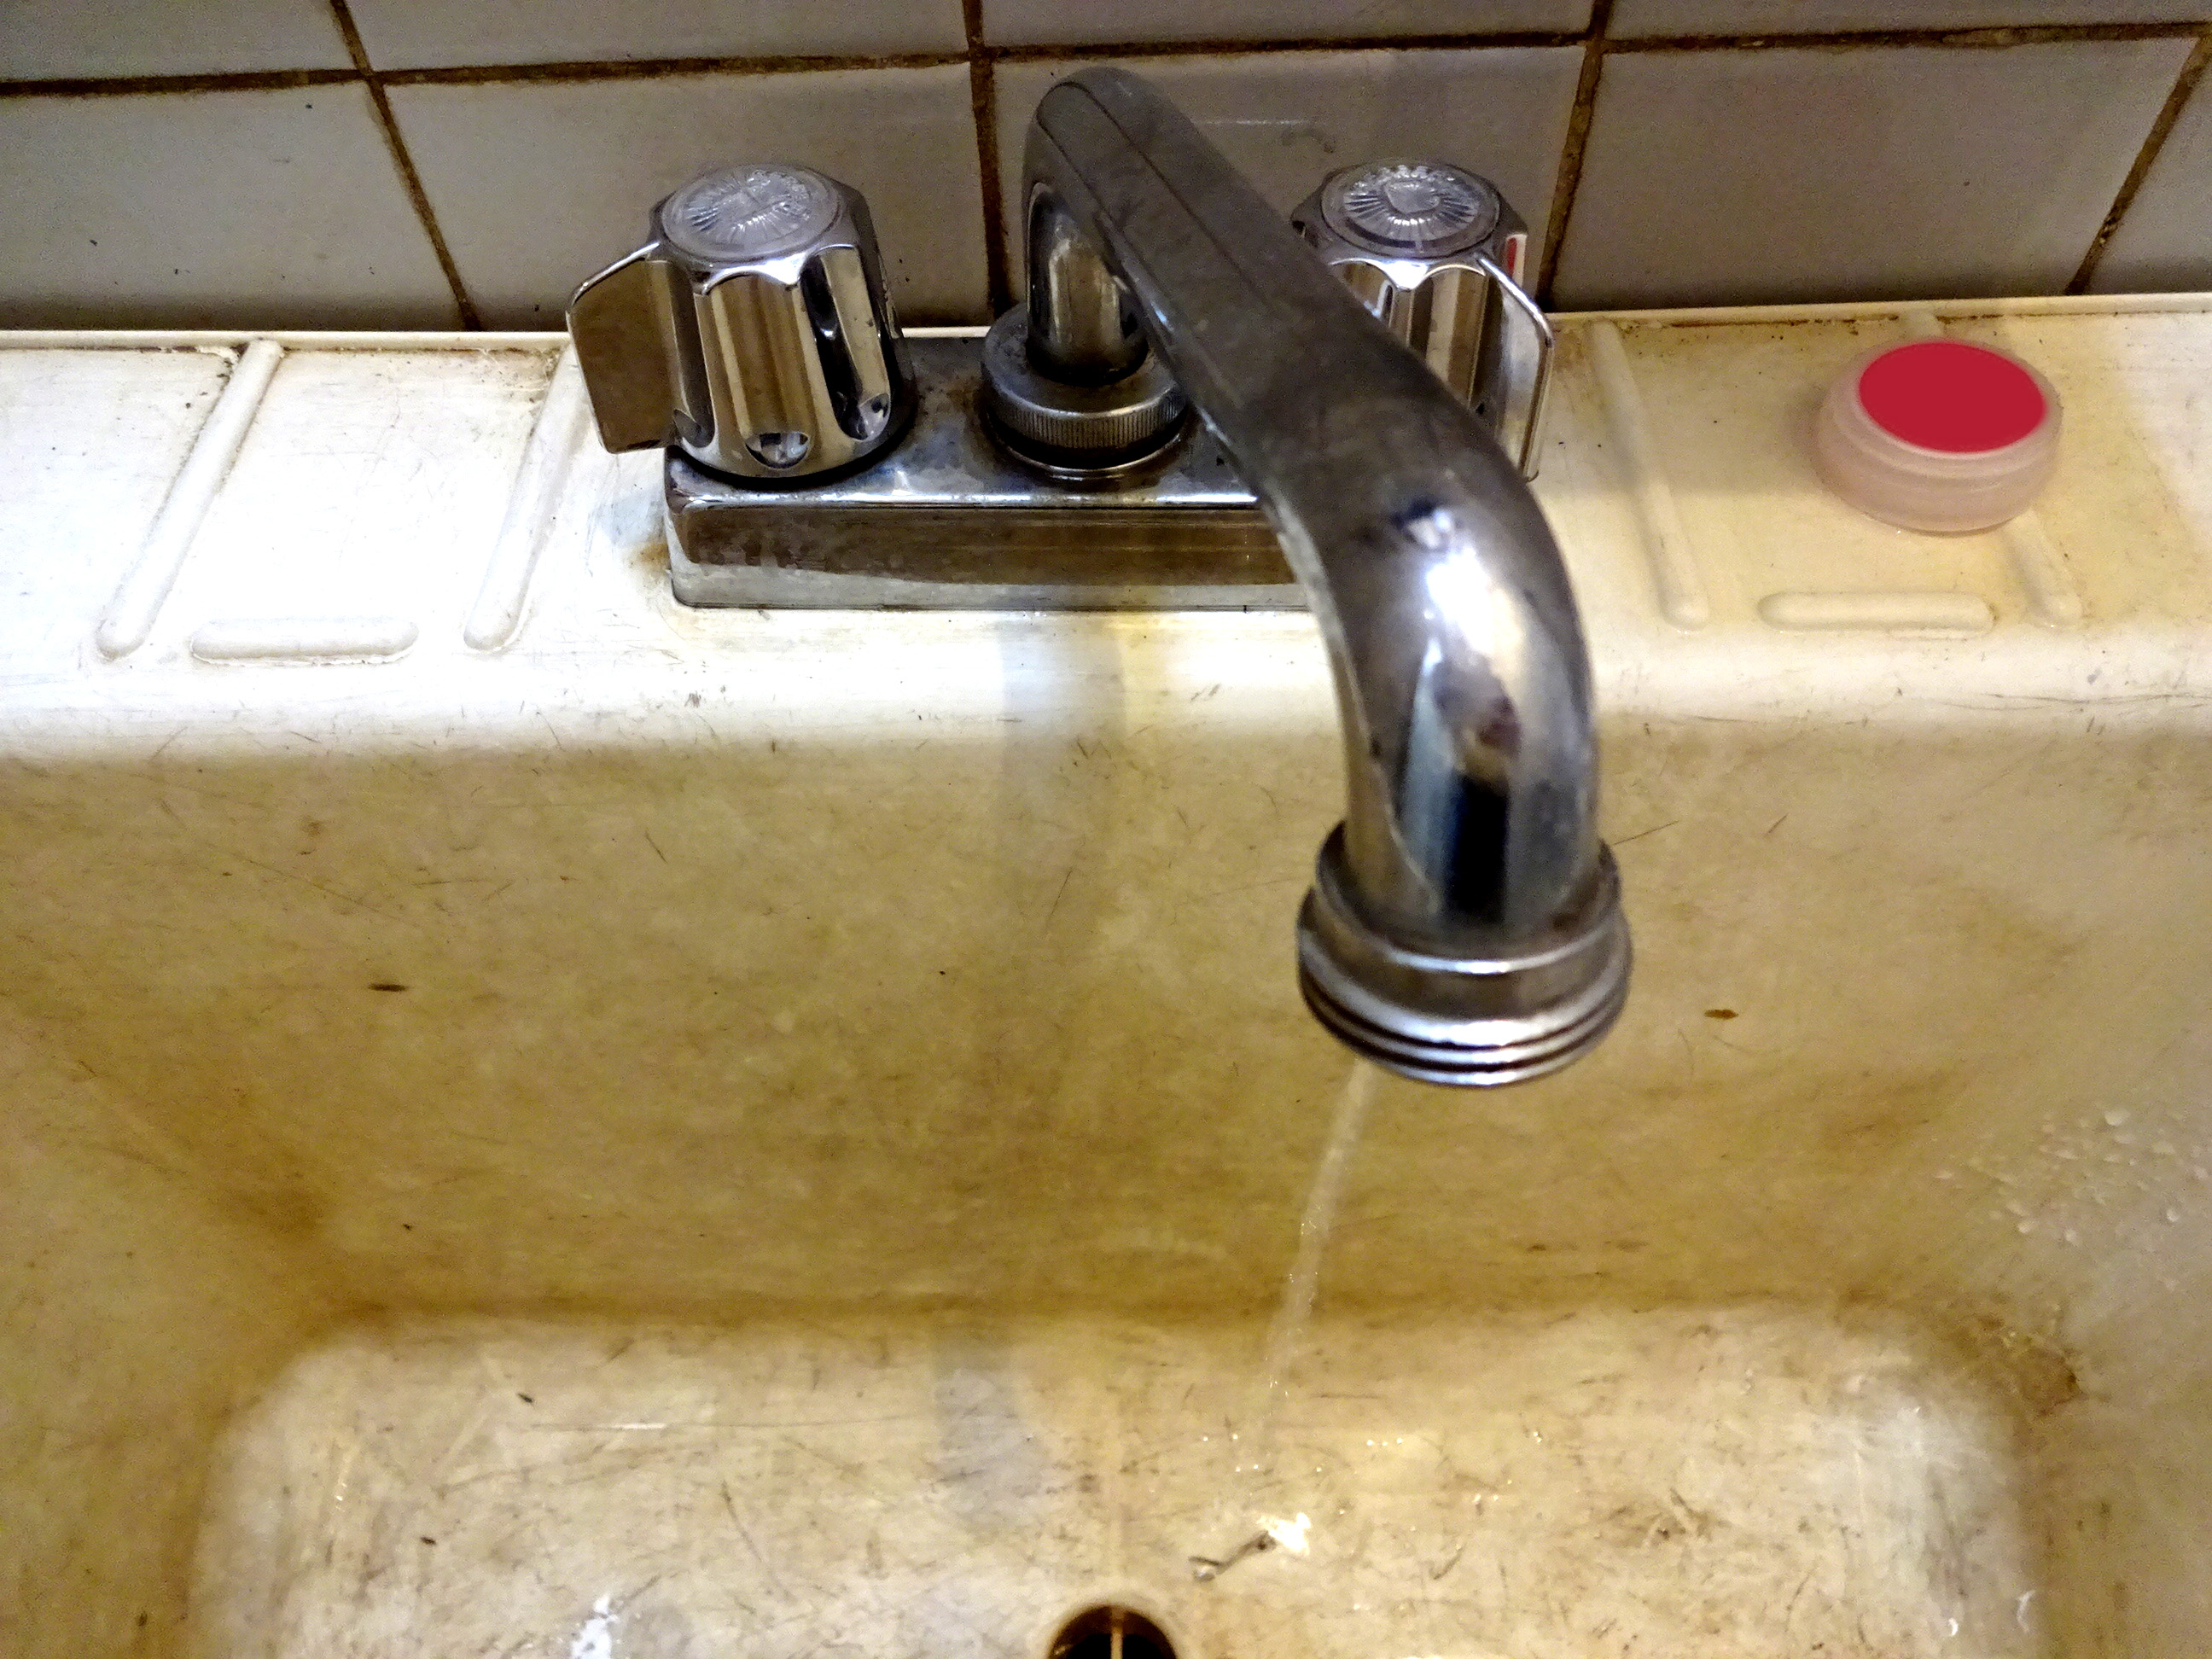 suddenly lost water pressure at kitchen sink